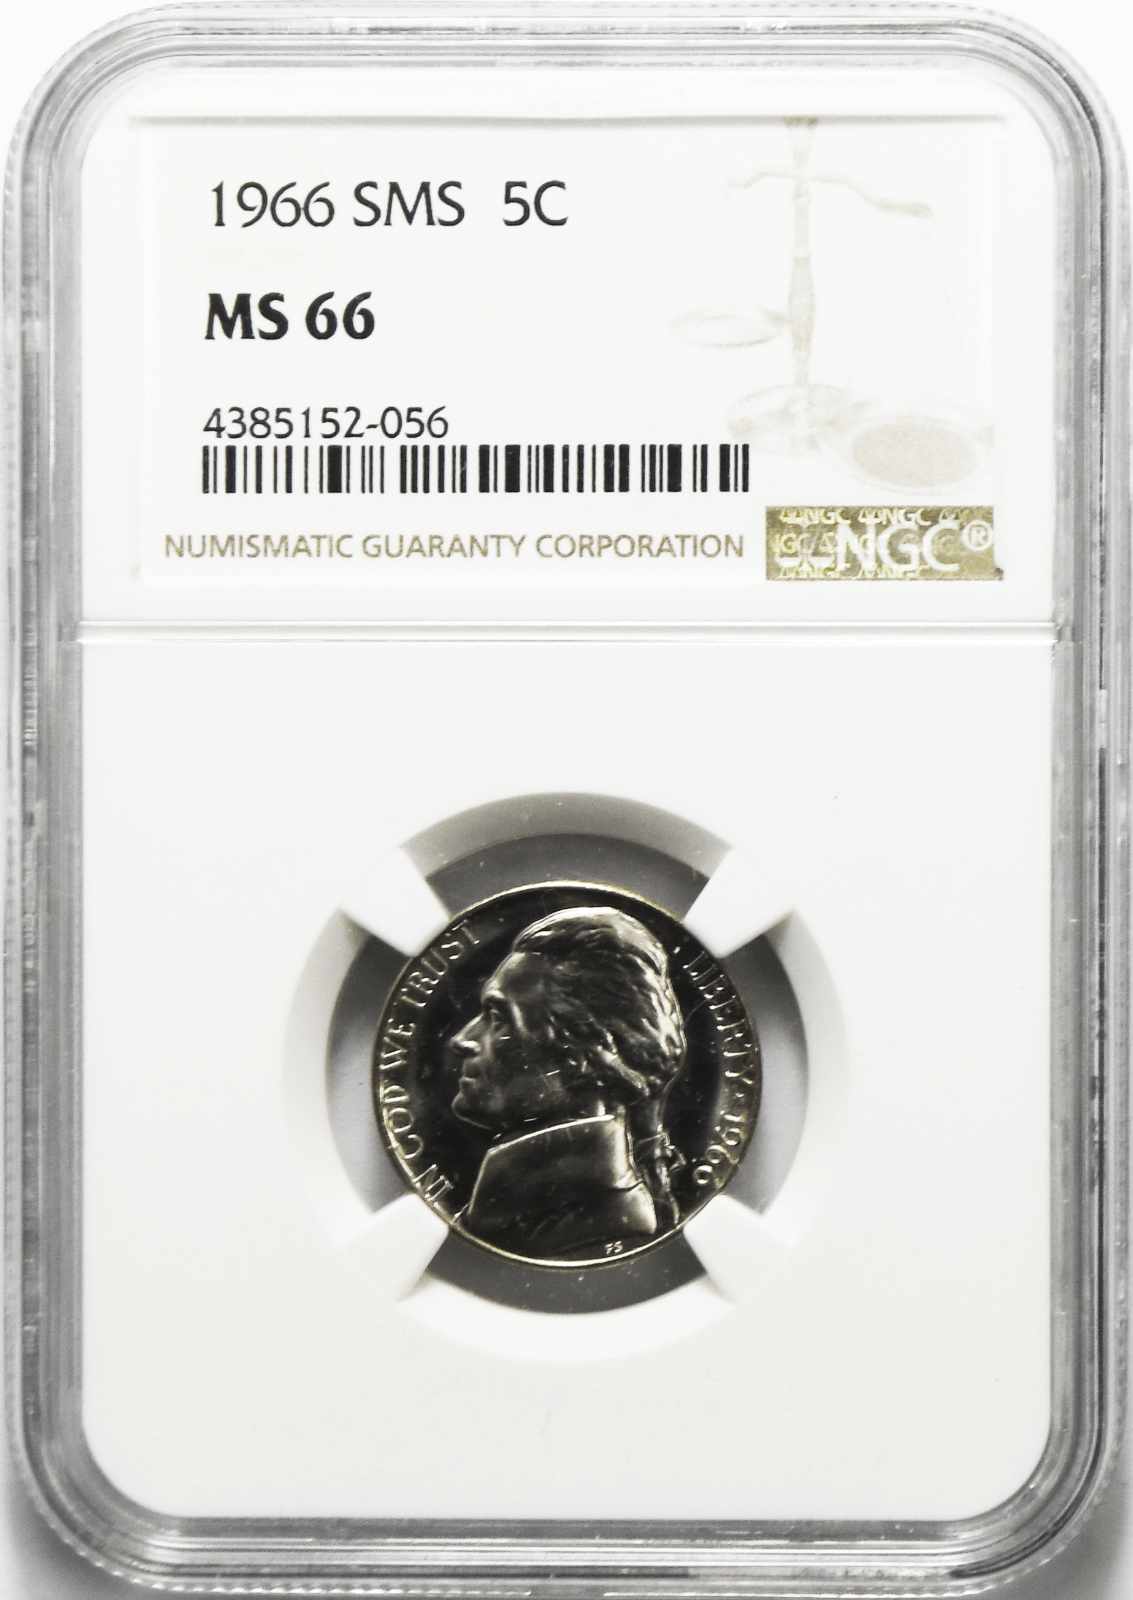 1965 5c SMS Jefferson Nickel NGC Five Cents MS67 Special Mint Gem Unc